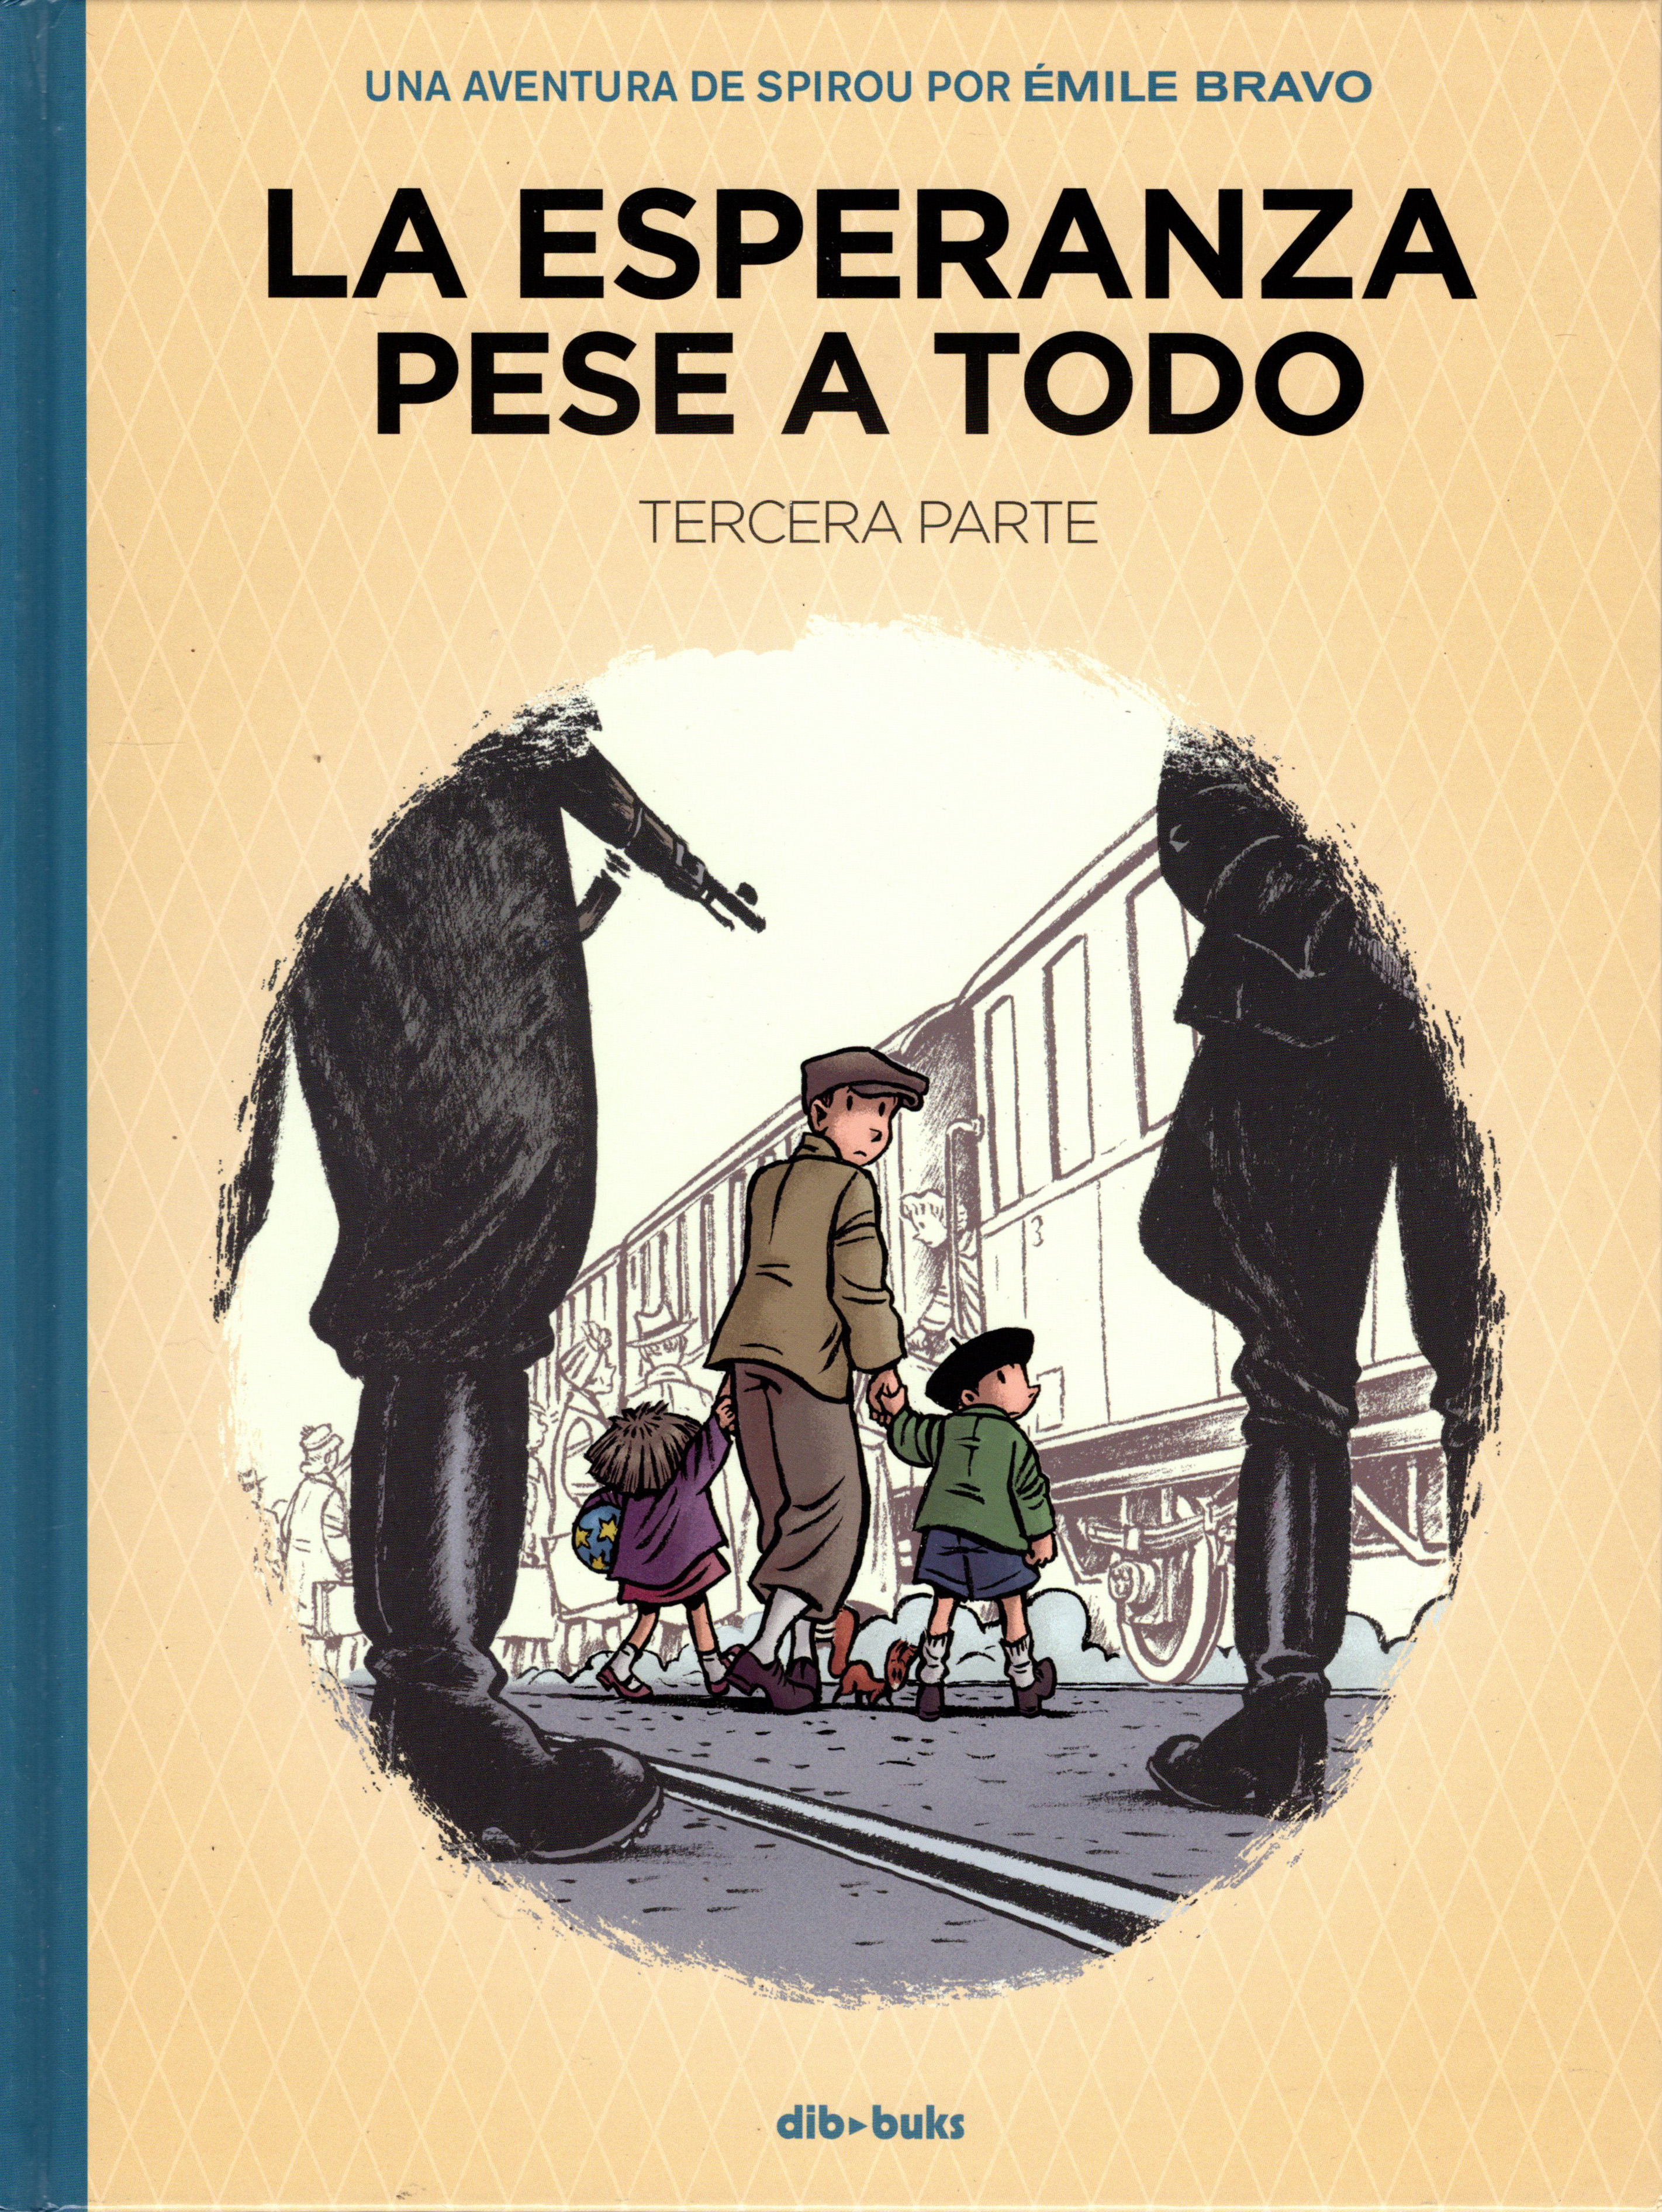 Émile Bravo: La esperanza pese a todo (Spanish language, Dibbuks)